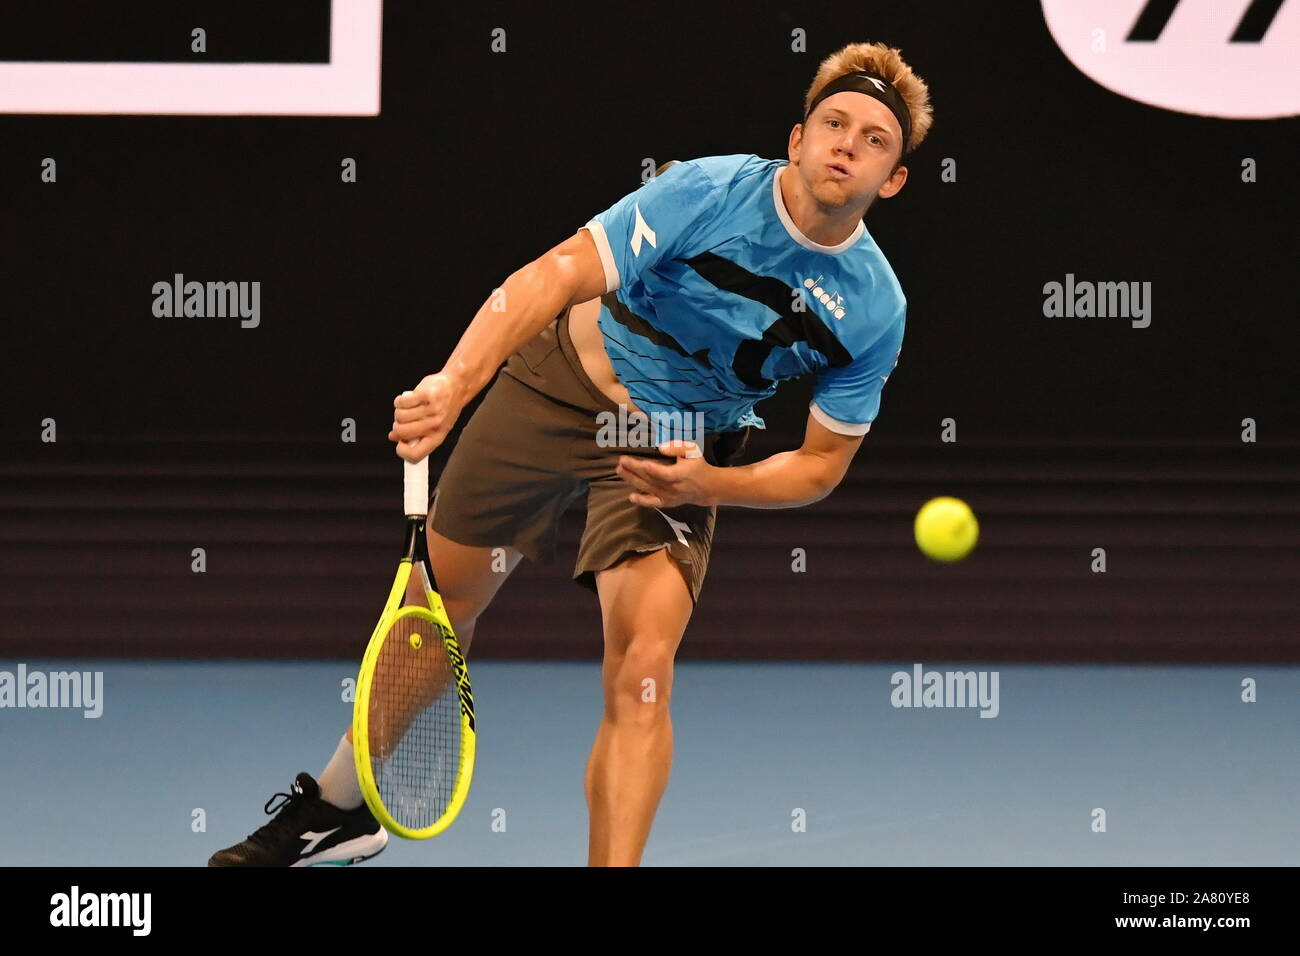 Milano, Italy, 05 Nov 2019, alejandro davidovich fokina during Next Gen ATP Finals - Tournament Round